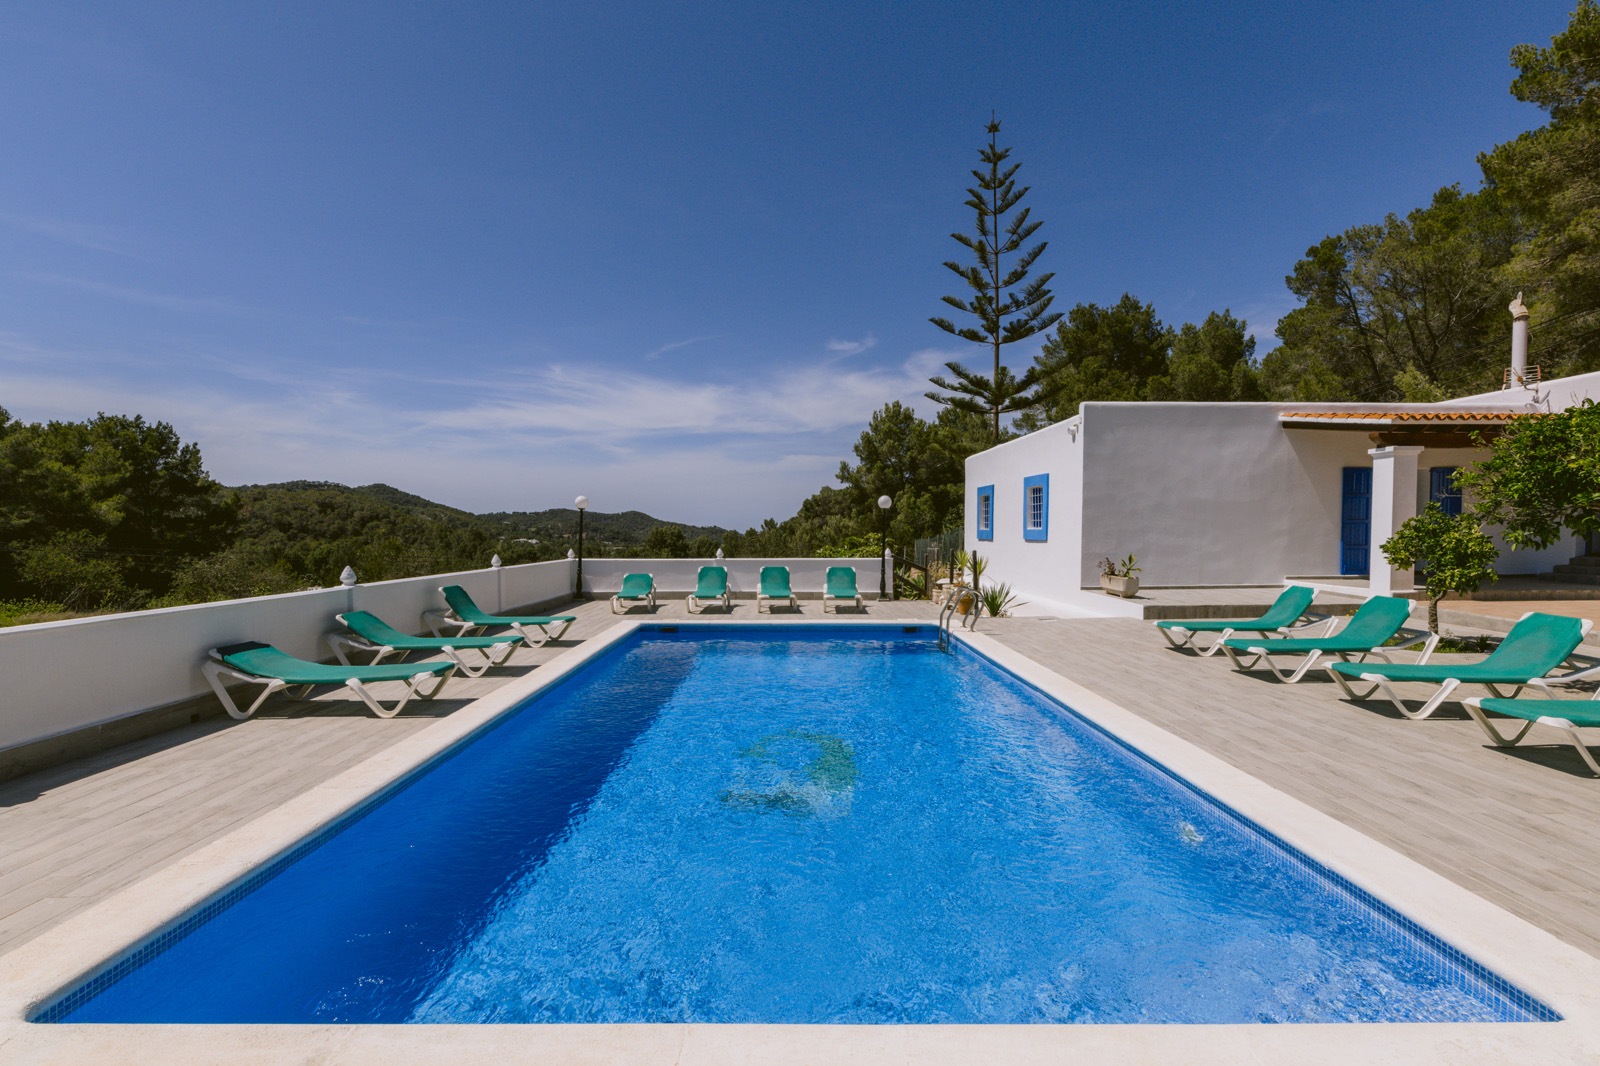 Ibiza Villas 2000 - Villa Alexa - Pool And House